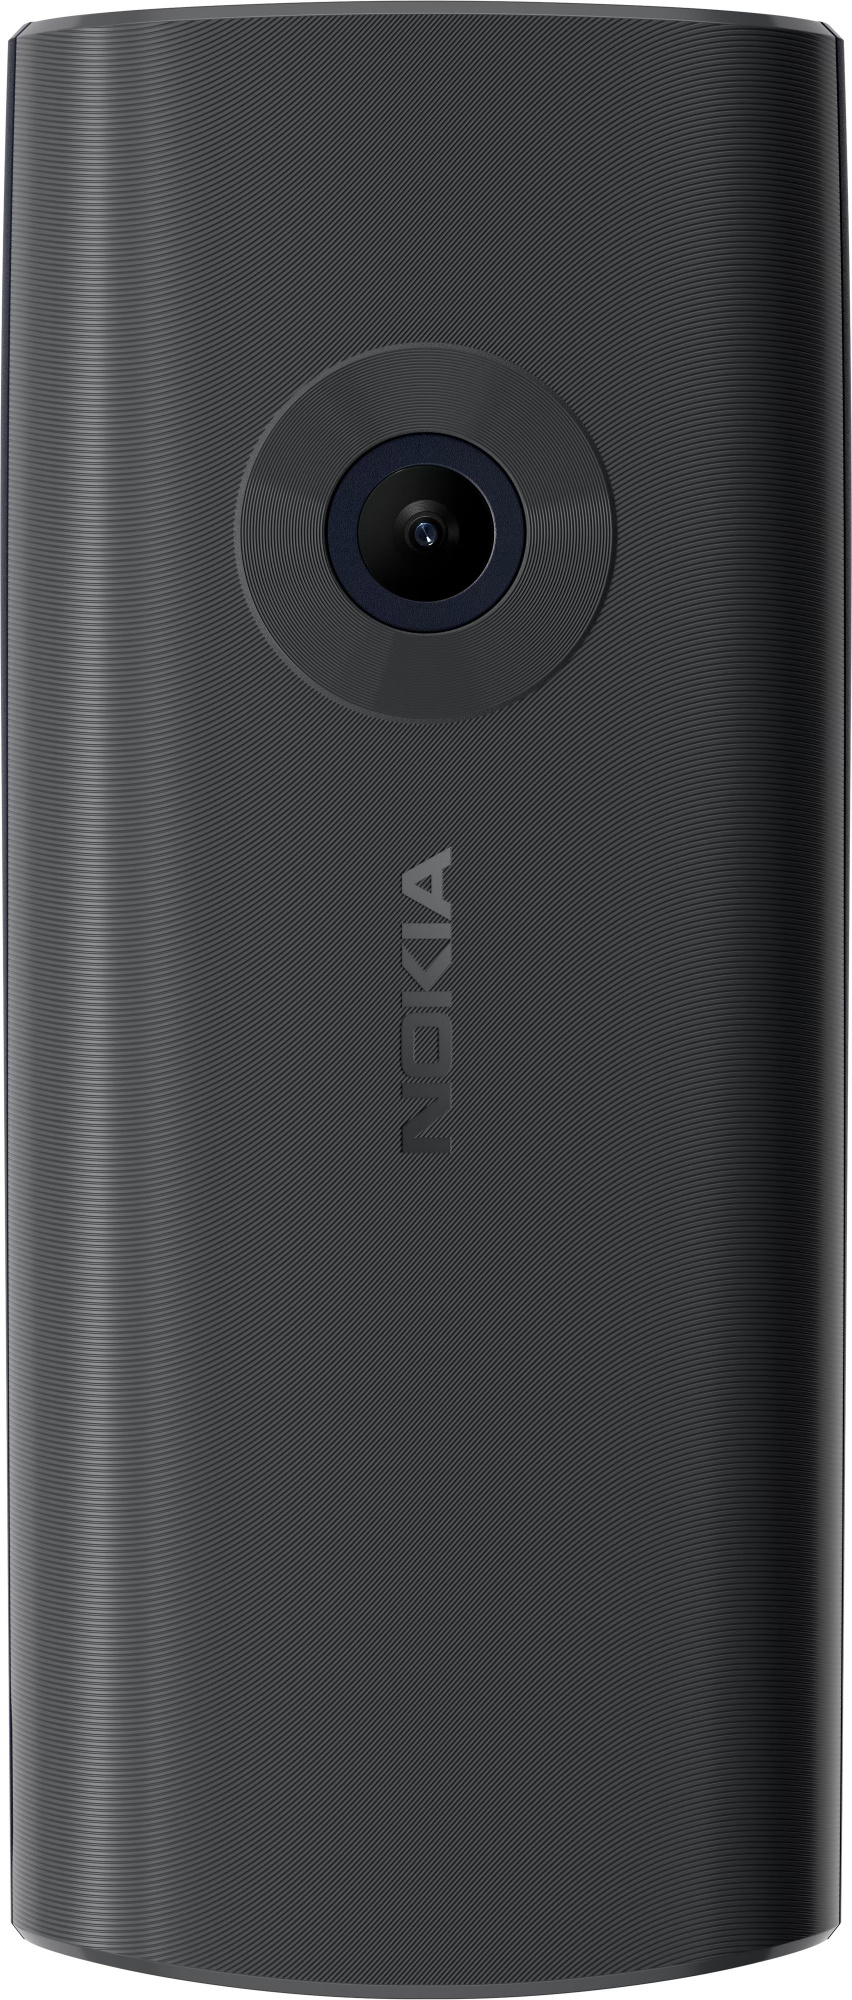 Мобильный телефон Nokia 110 (TA-1567) DS EAC 0.048 черный моноблок 2Sim 1.8" 240x320 Series 30+ 0.3Mpix GSM900/1800 Protect MP3 FM microSD max32Gb